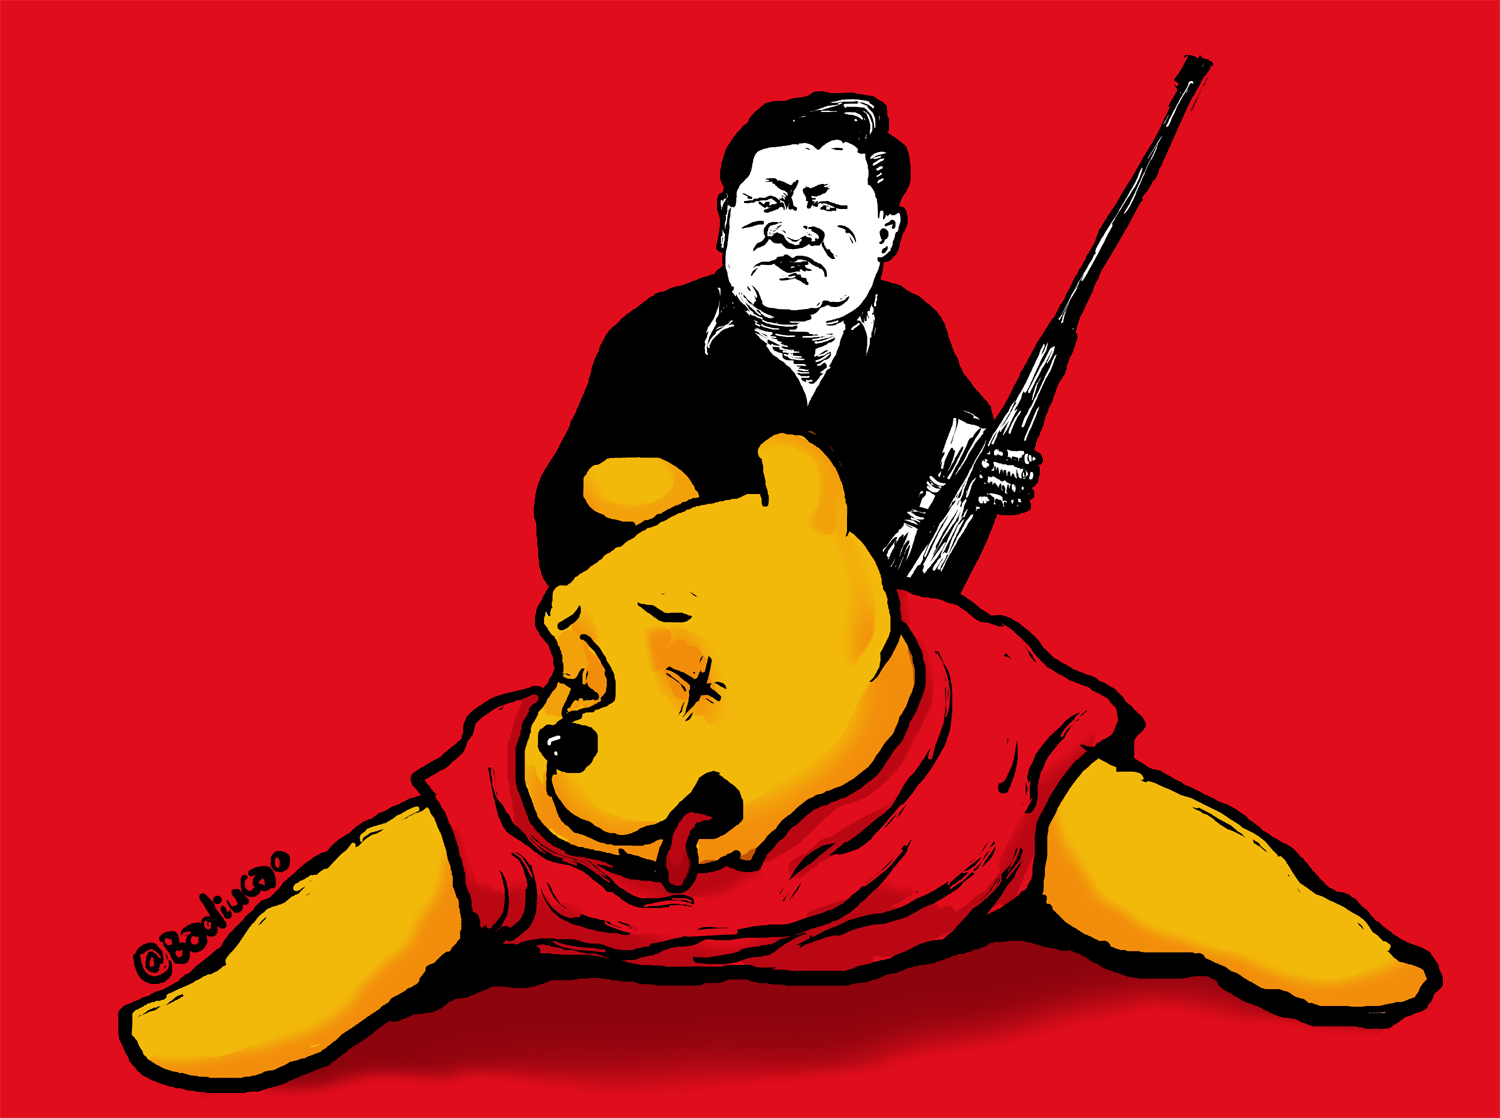 Meet Badiucao, the Dissident Cartoonist Taking on Beijing | Time